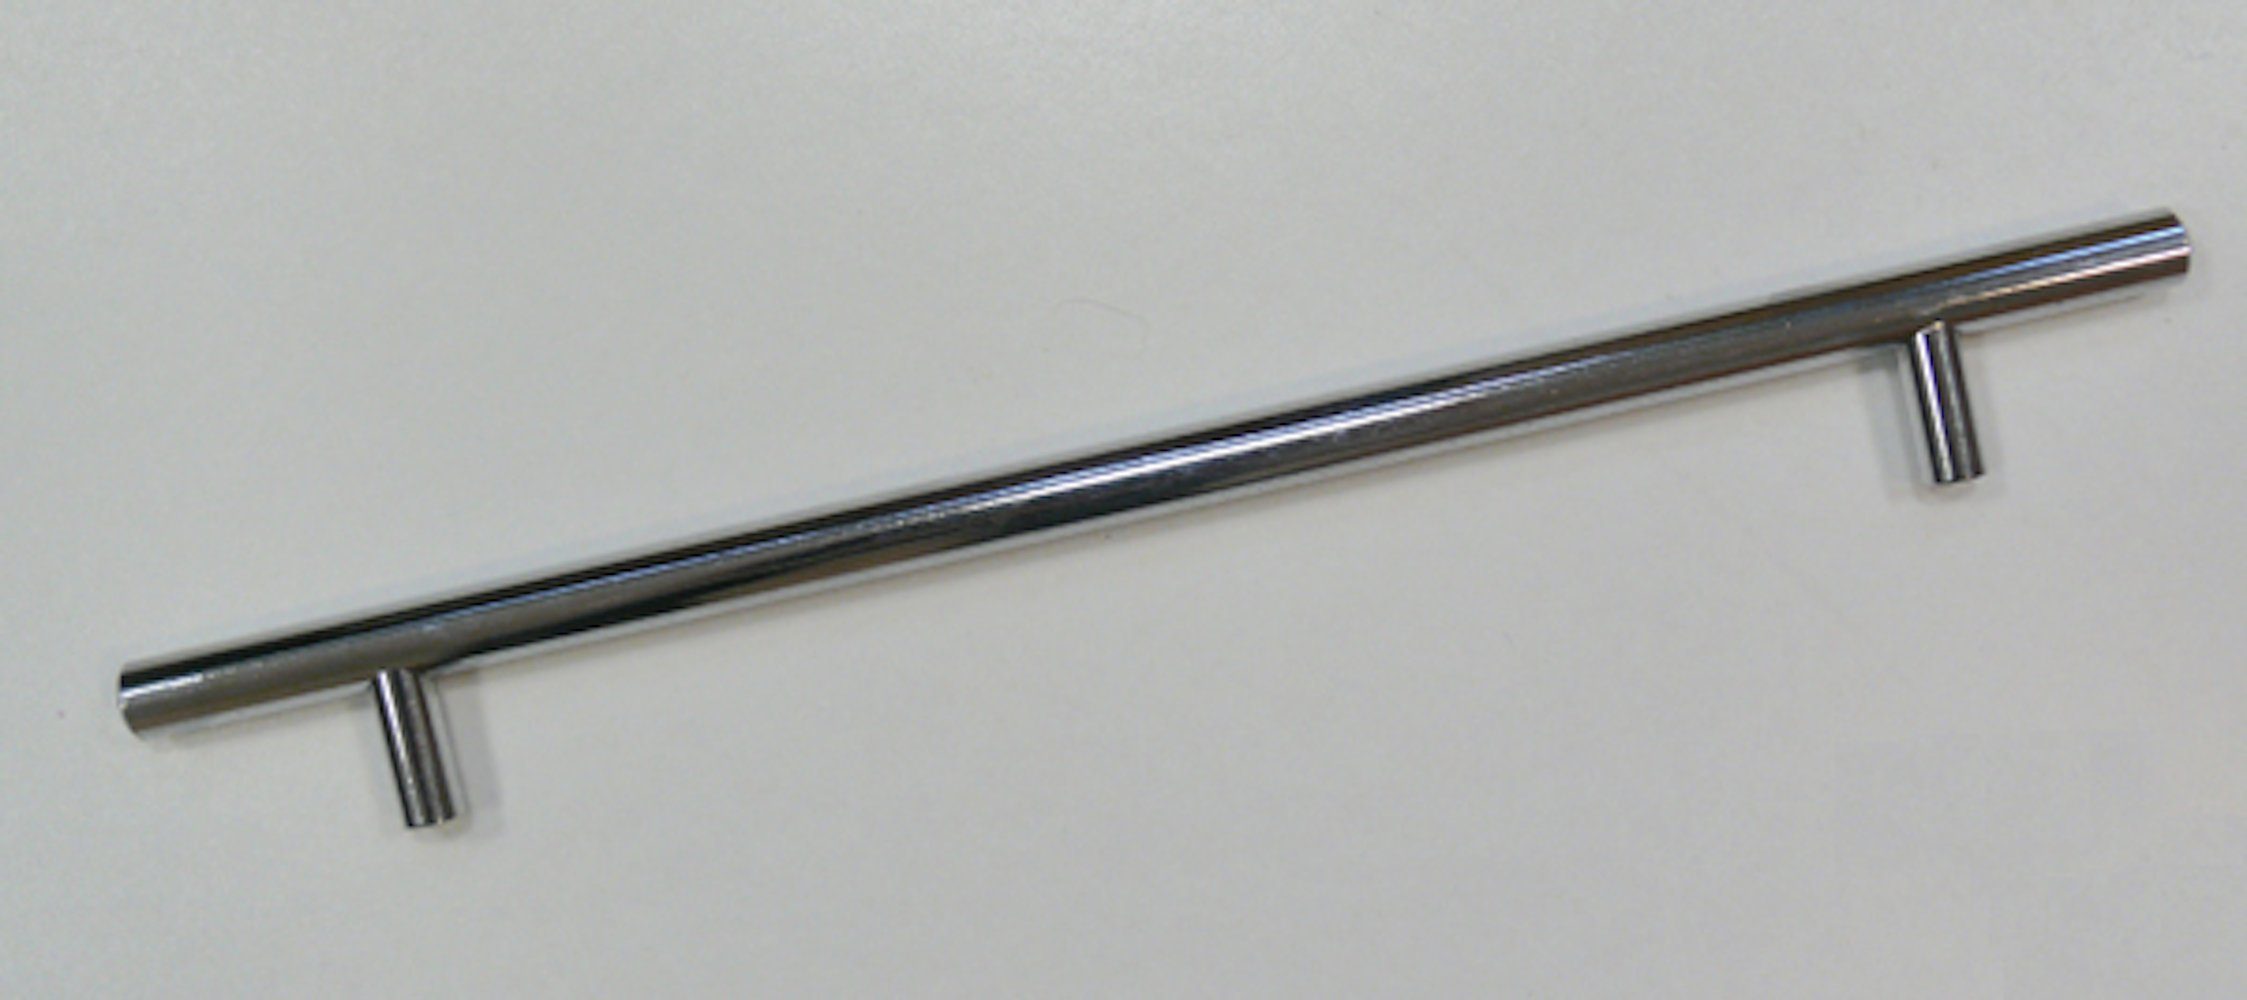 Feldmann-Wohnen Unterschrank Kvantum (Kvantum) 1-türig grey Front- und dust Korpusfarbe 50cm wählbar matt